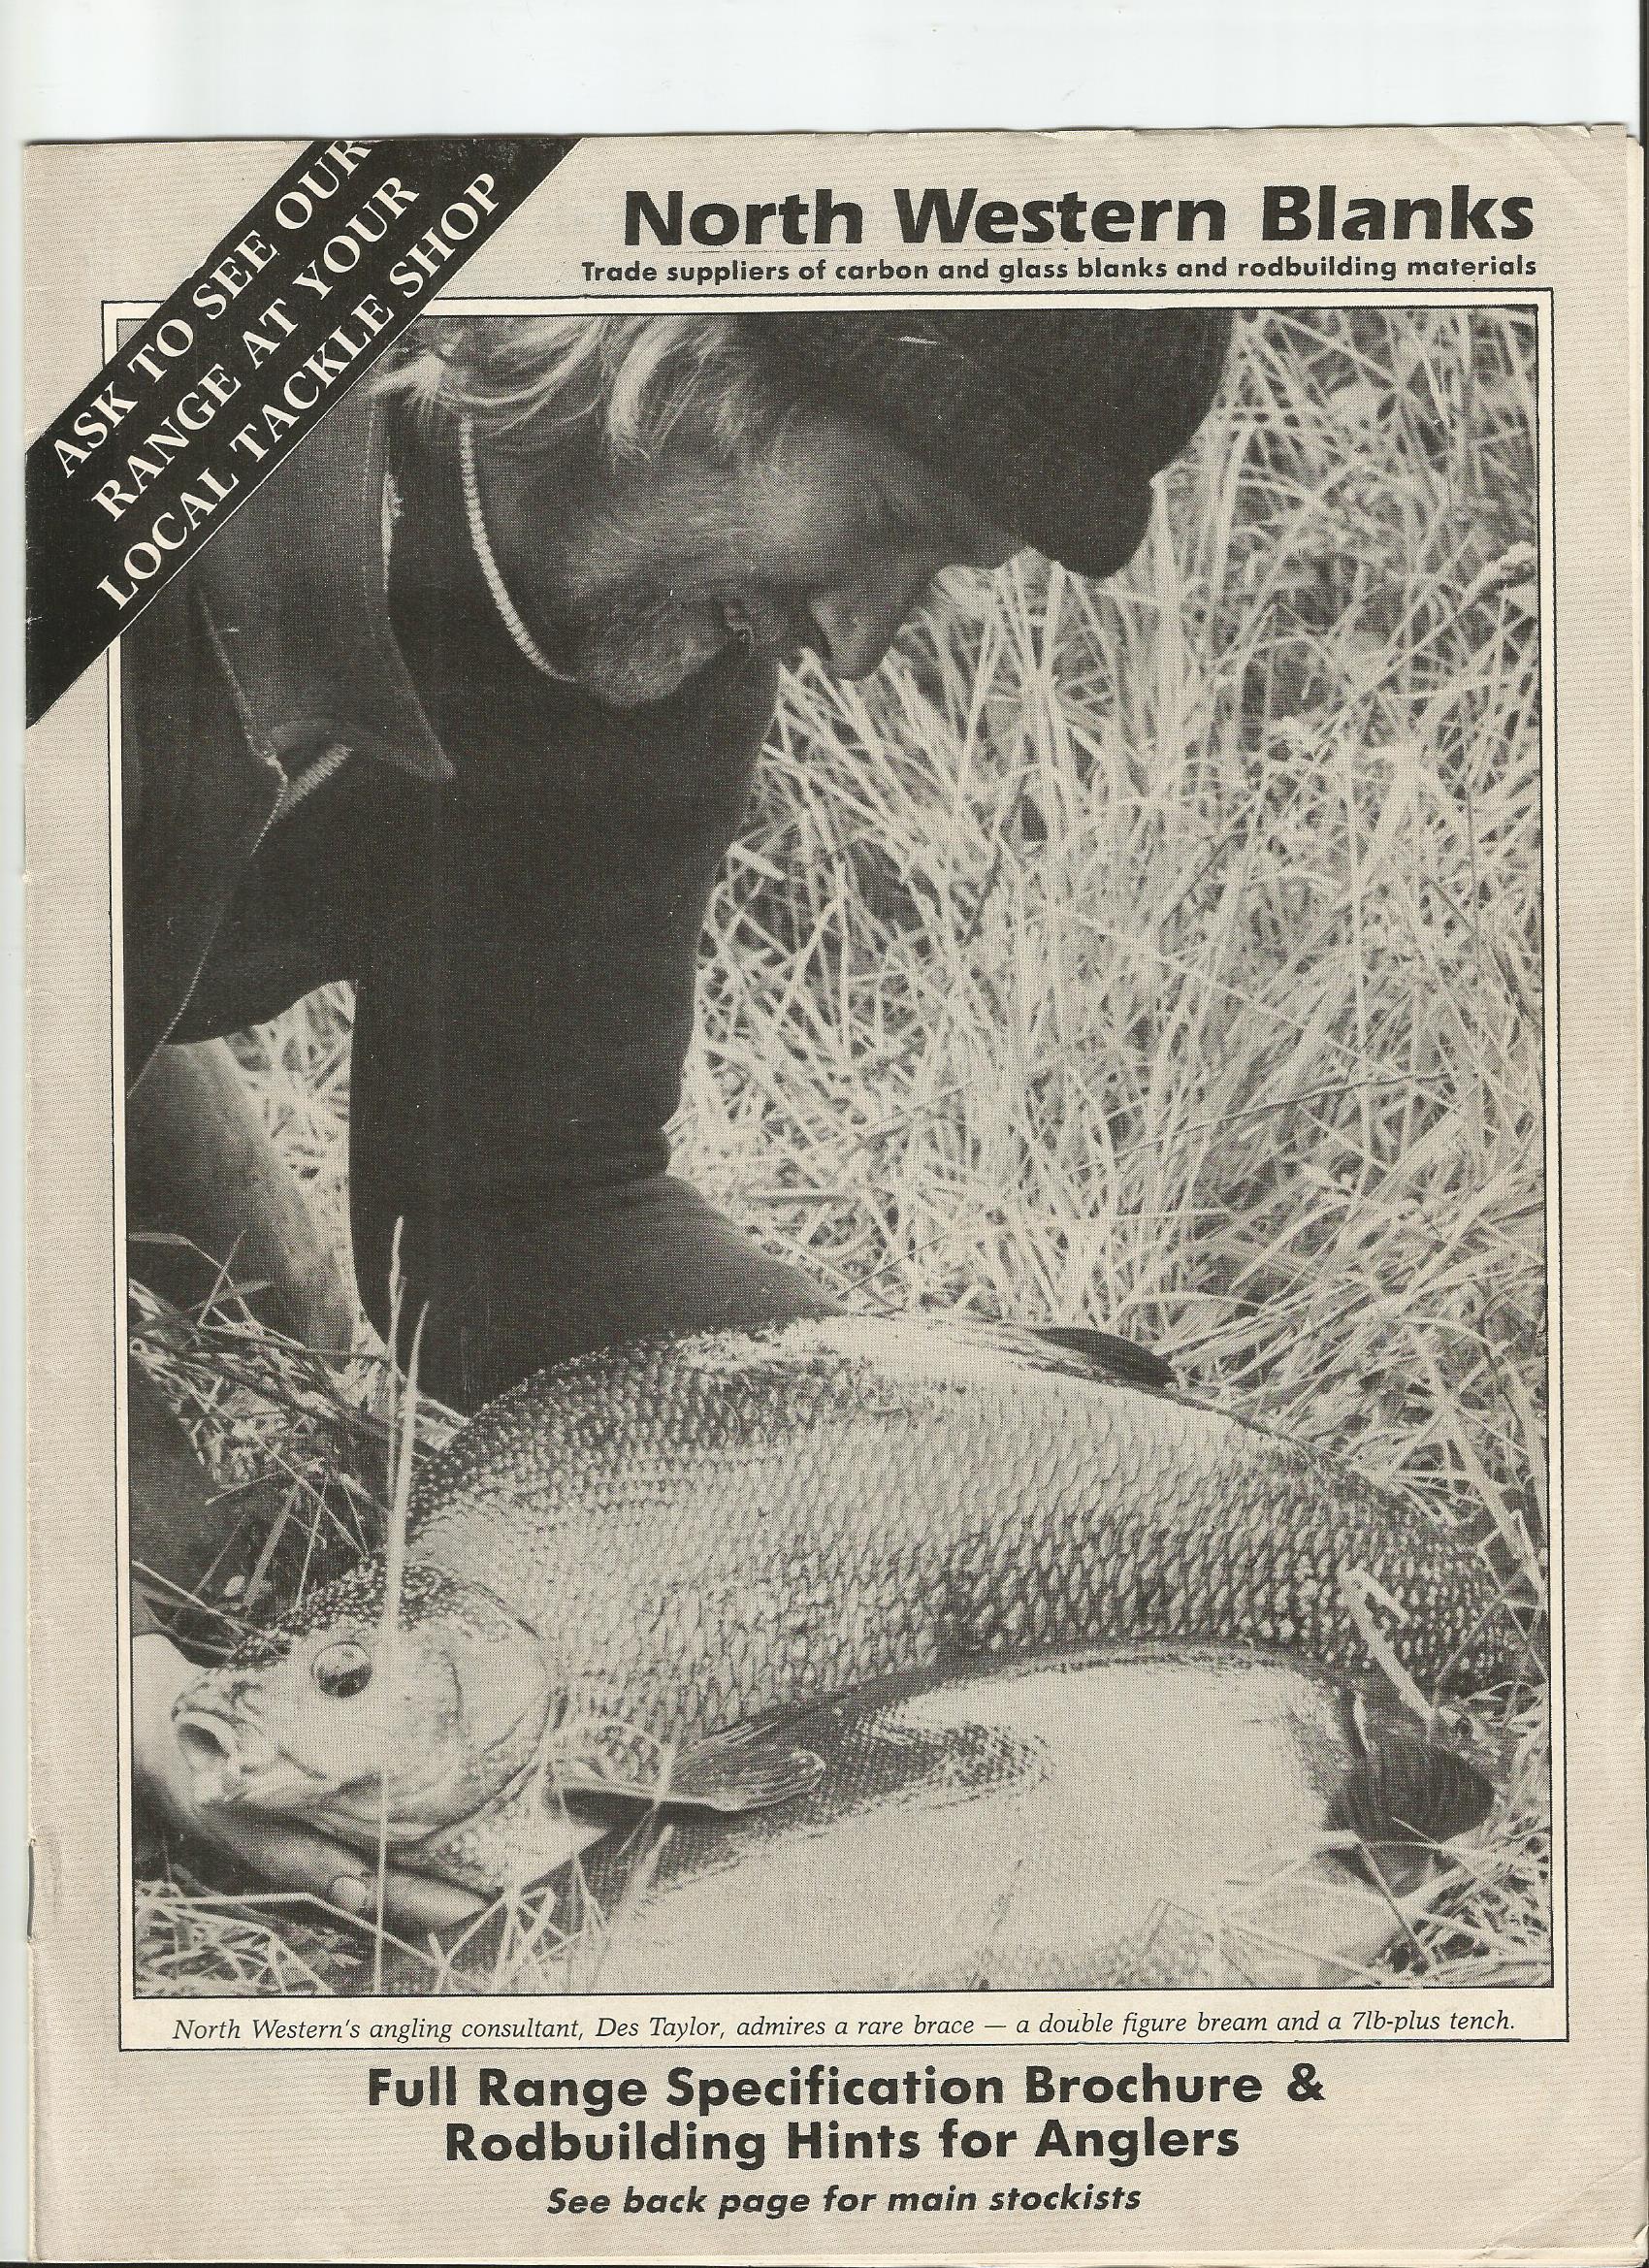 North Western Blanks Brochure Circa 1985  FishingMagic Forums - sponsored  by Thomas Turner